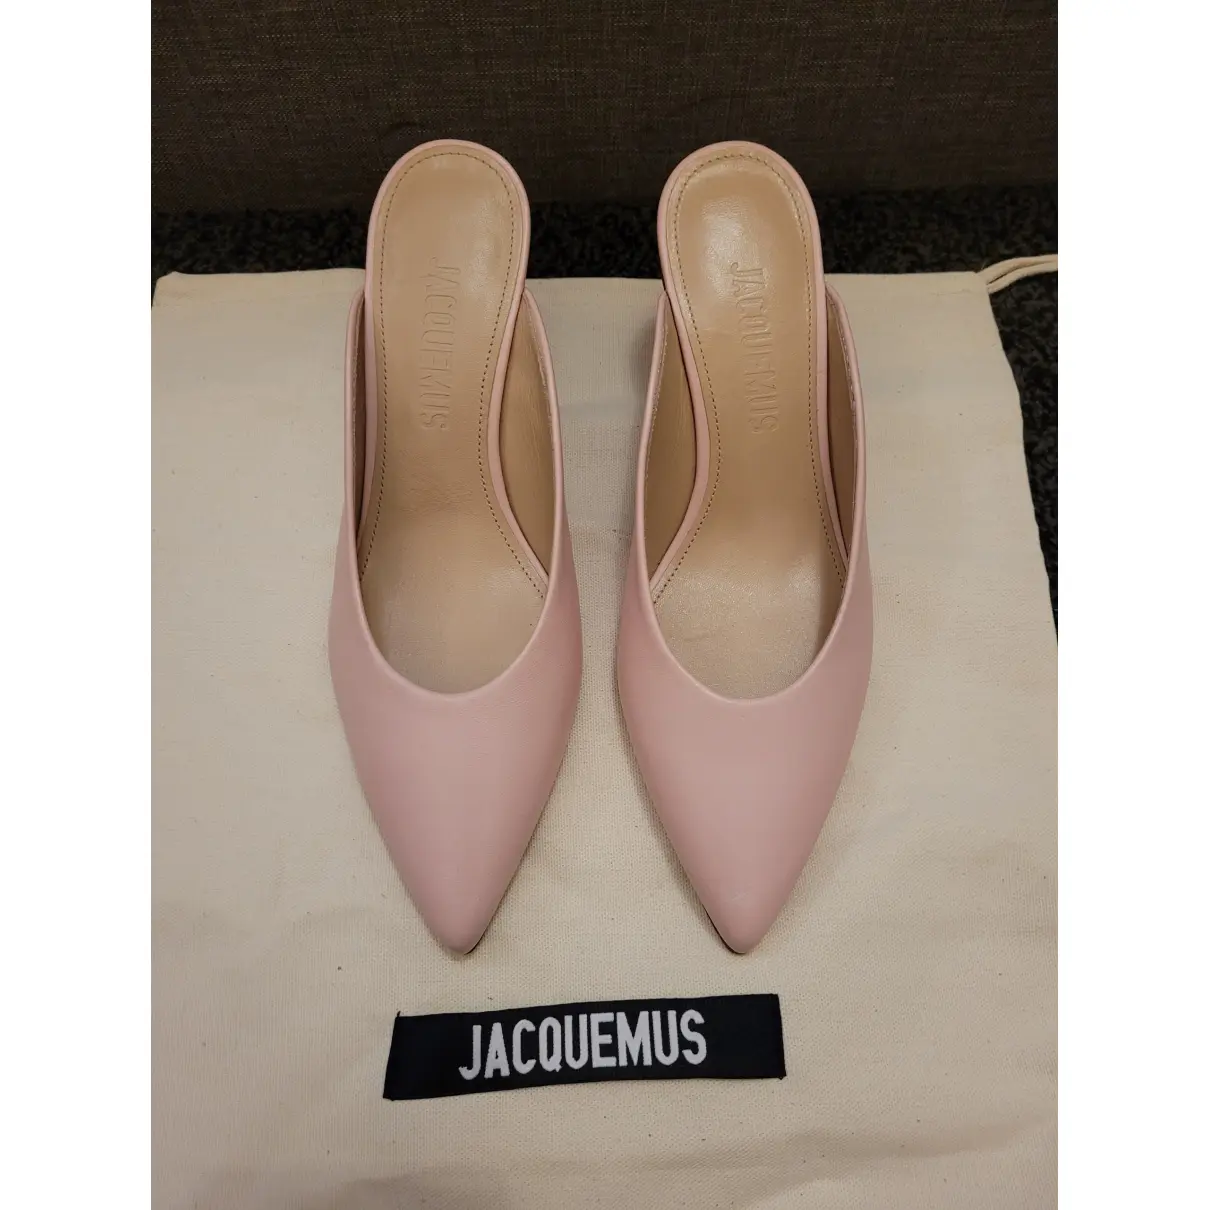 Buy Jacquemus Leather ballet flats online